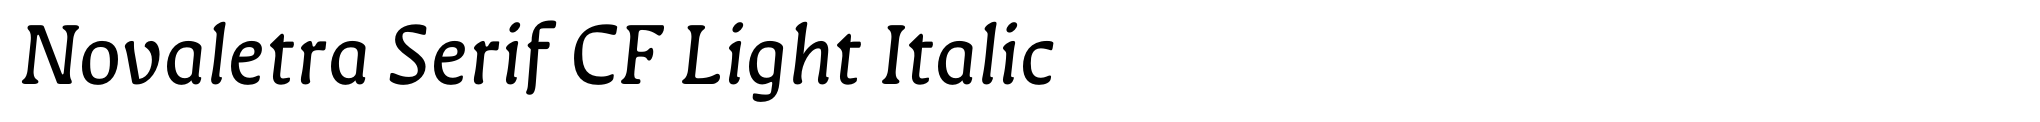 Novaletra Serif CF Light Italic image